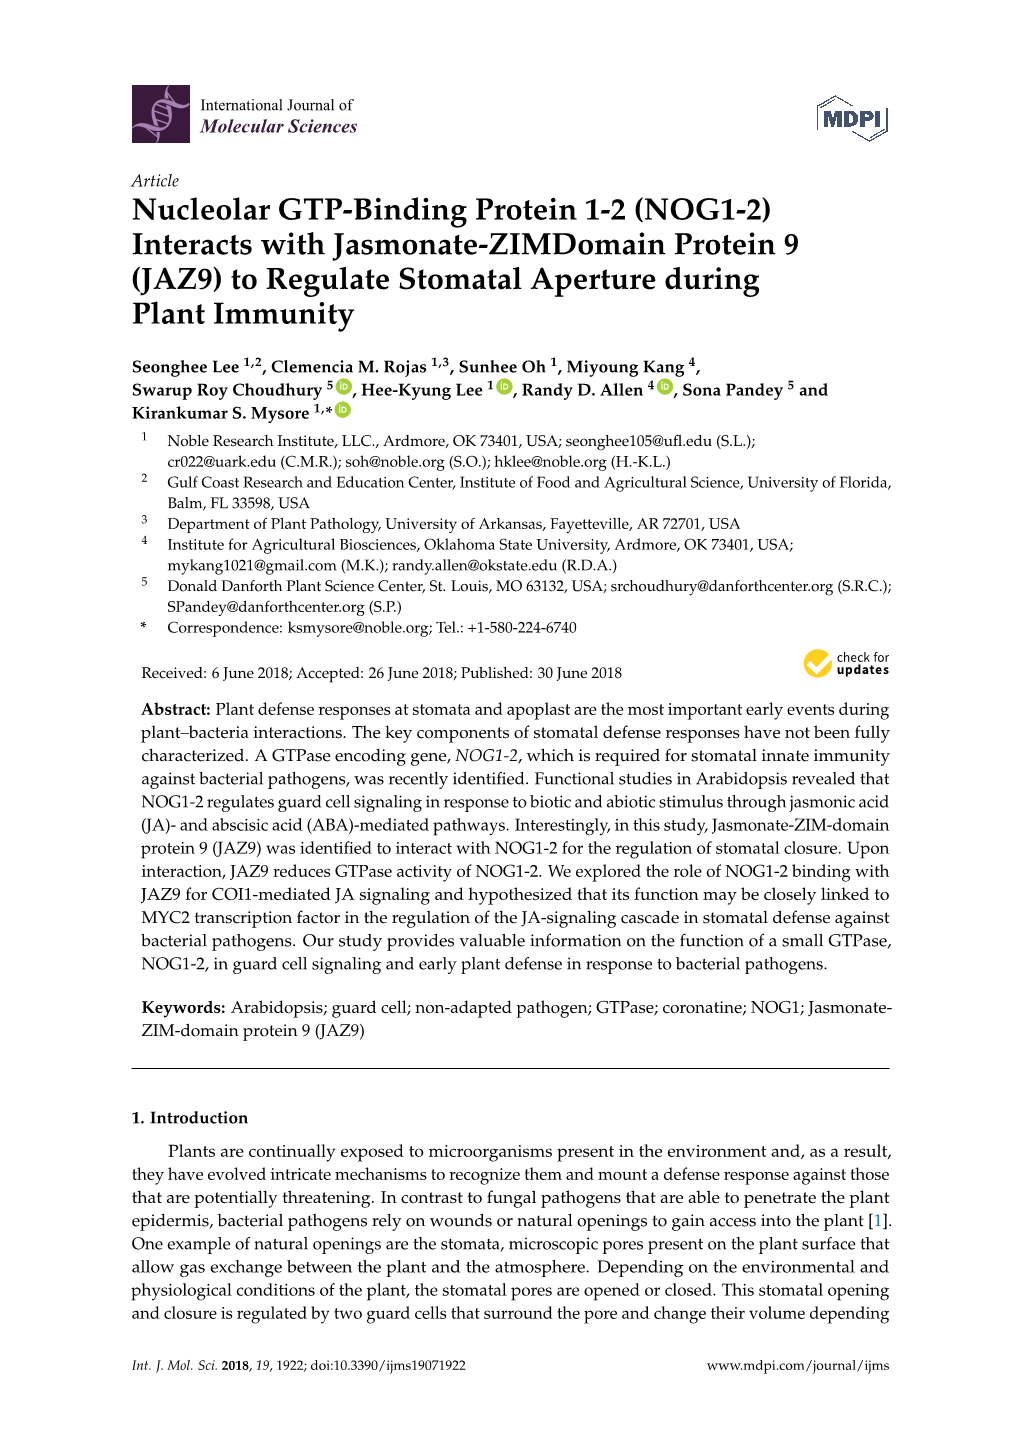 Interacts with Jasmonate-Zimdomain Protein 9 (JAZ9) to Regulate Stomatal Aperture During Plant Immunity